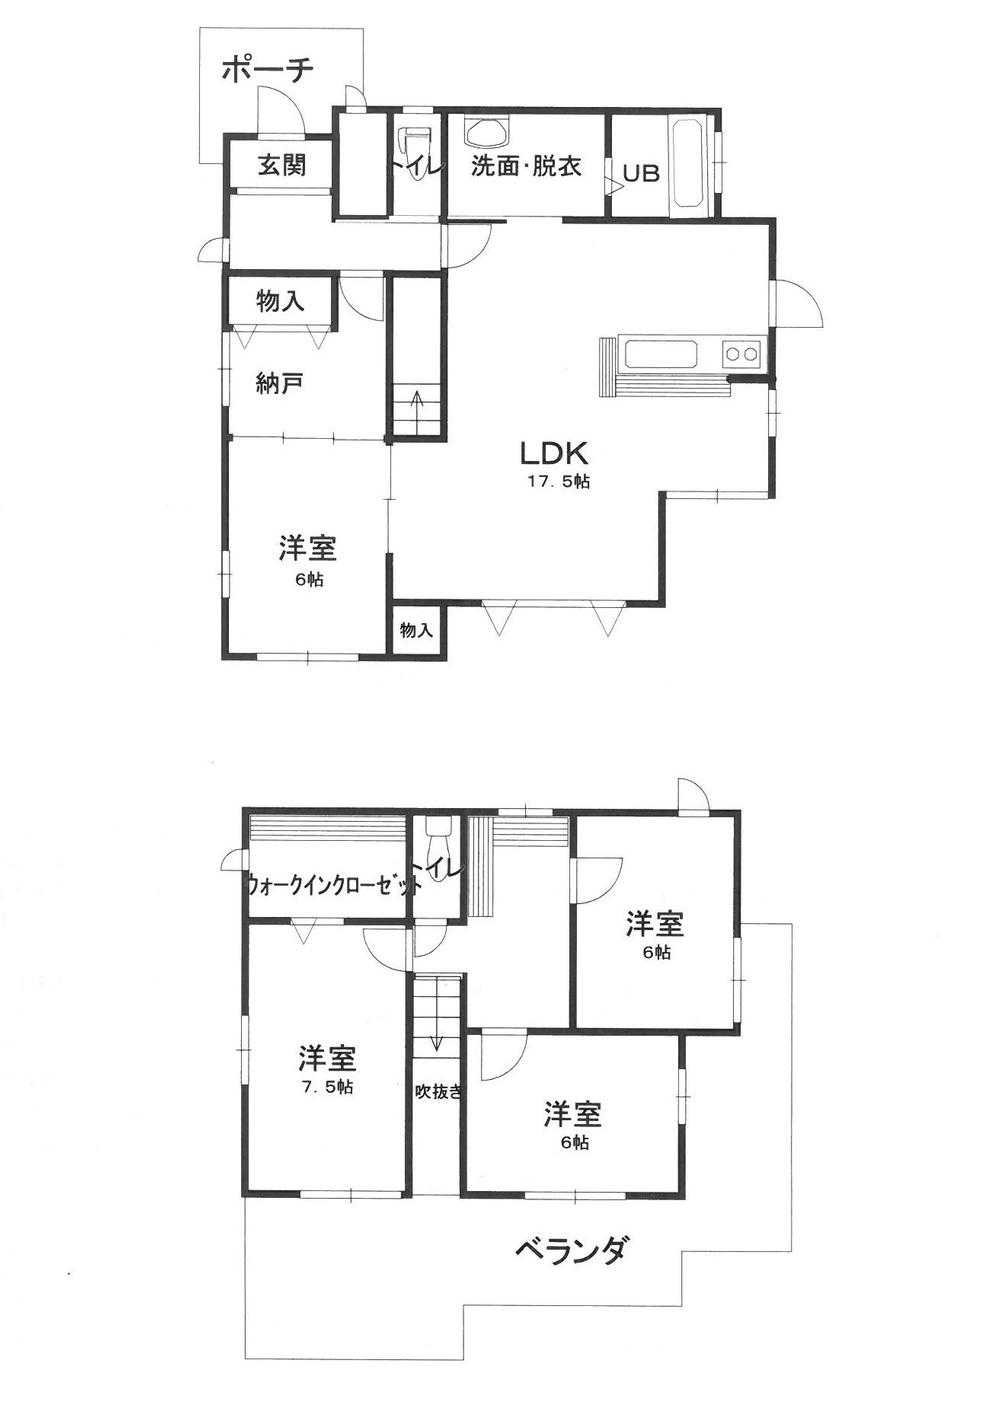 Floor plan. 29,800,000 yen, 4LDK, Land area 189.77 sq m , Building area 127.94 sq m